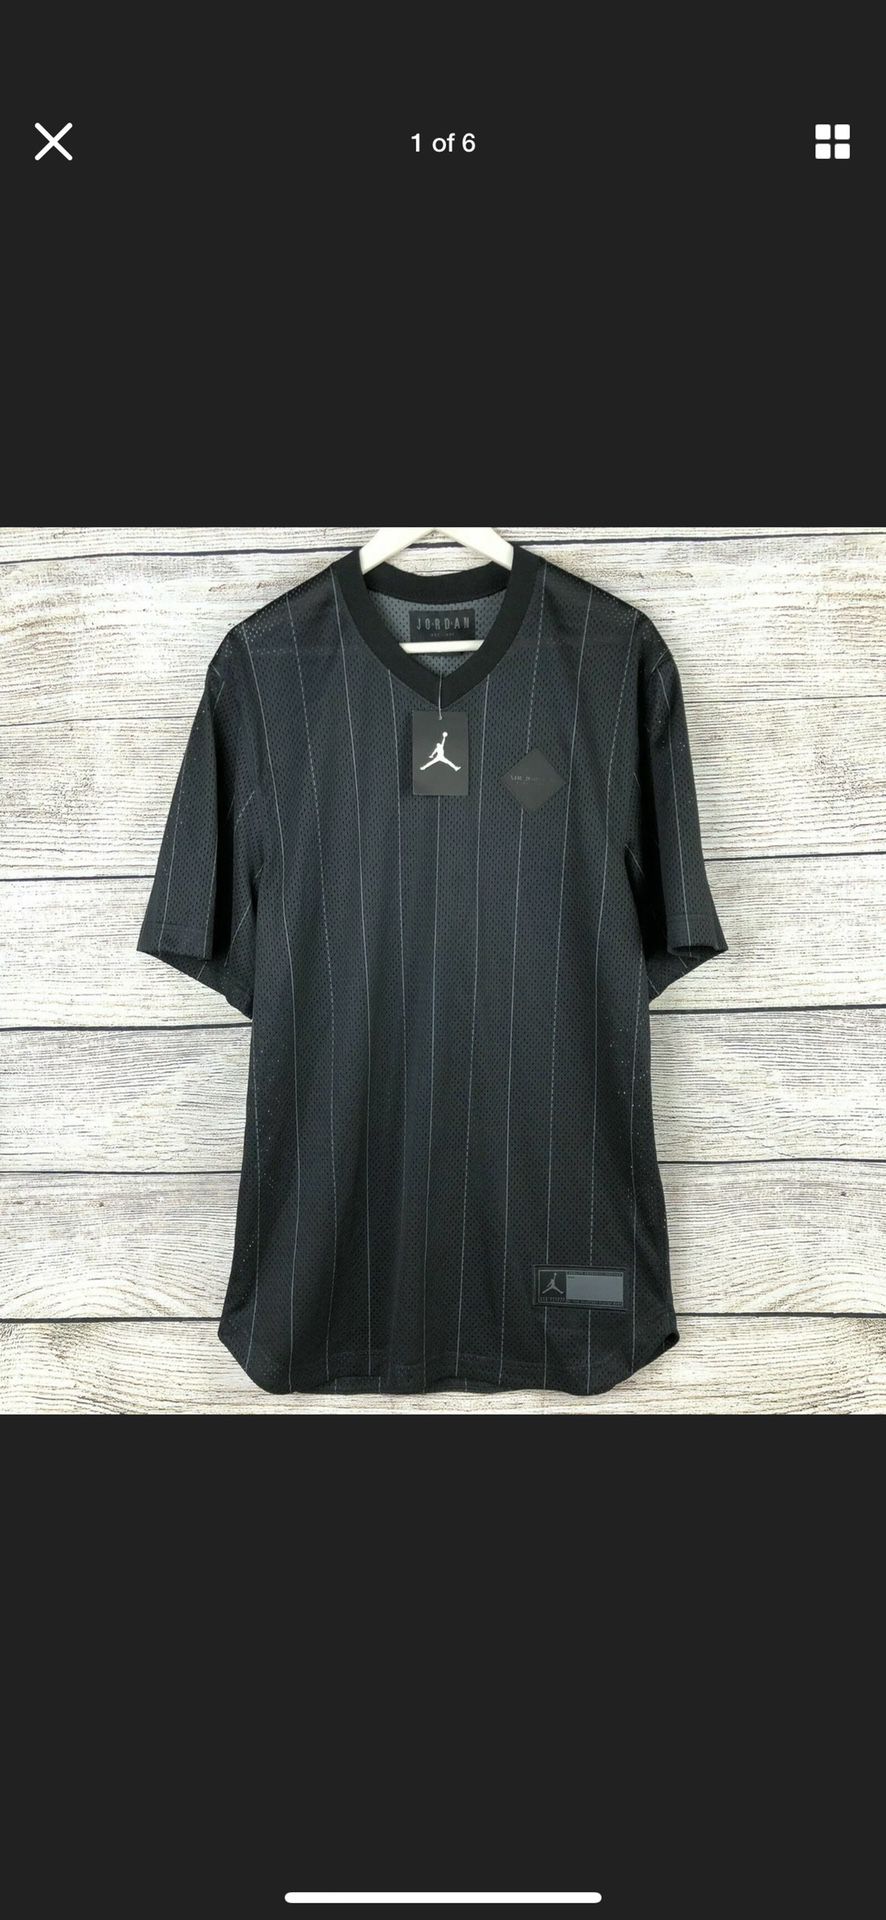 NIKE AIR JORDAN Retro 9 Sportswear Jersey Men’s Shirt Black AH9909-010 SIZE XL